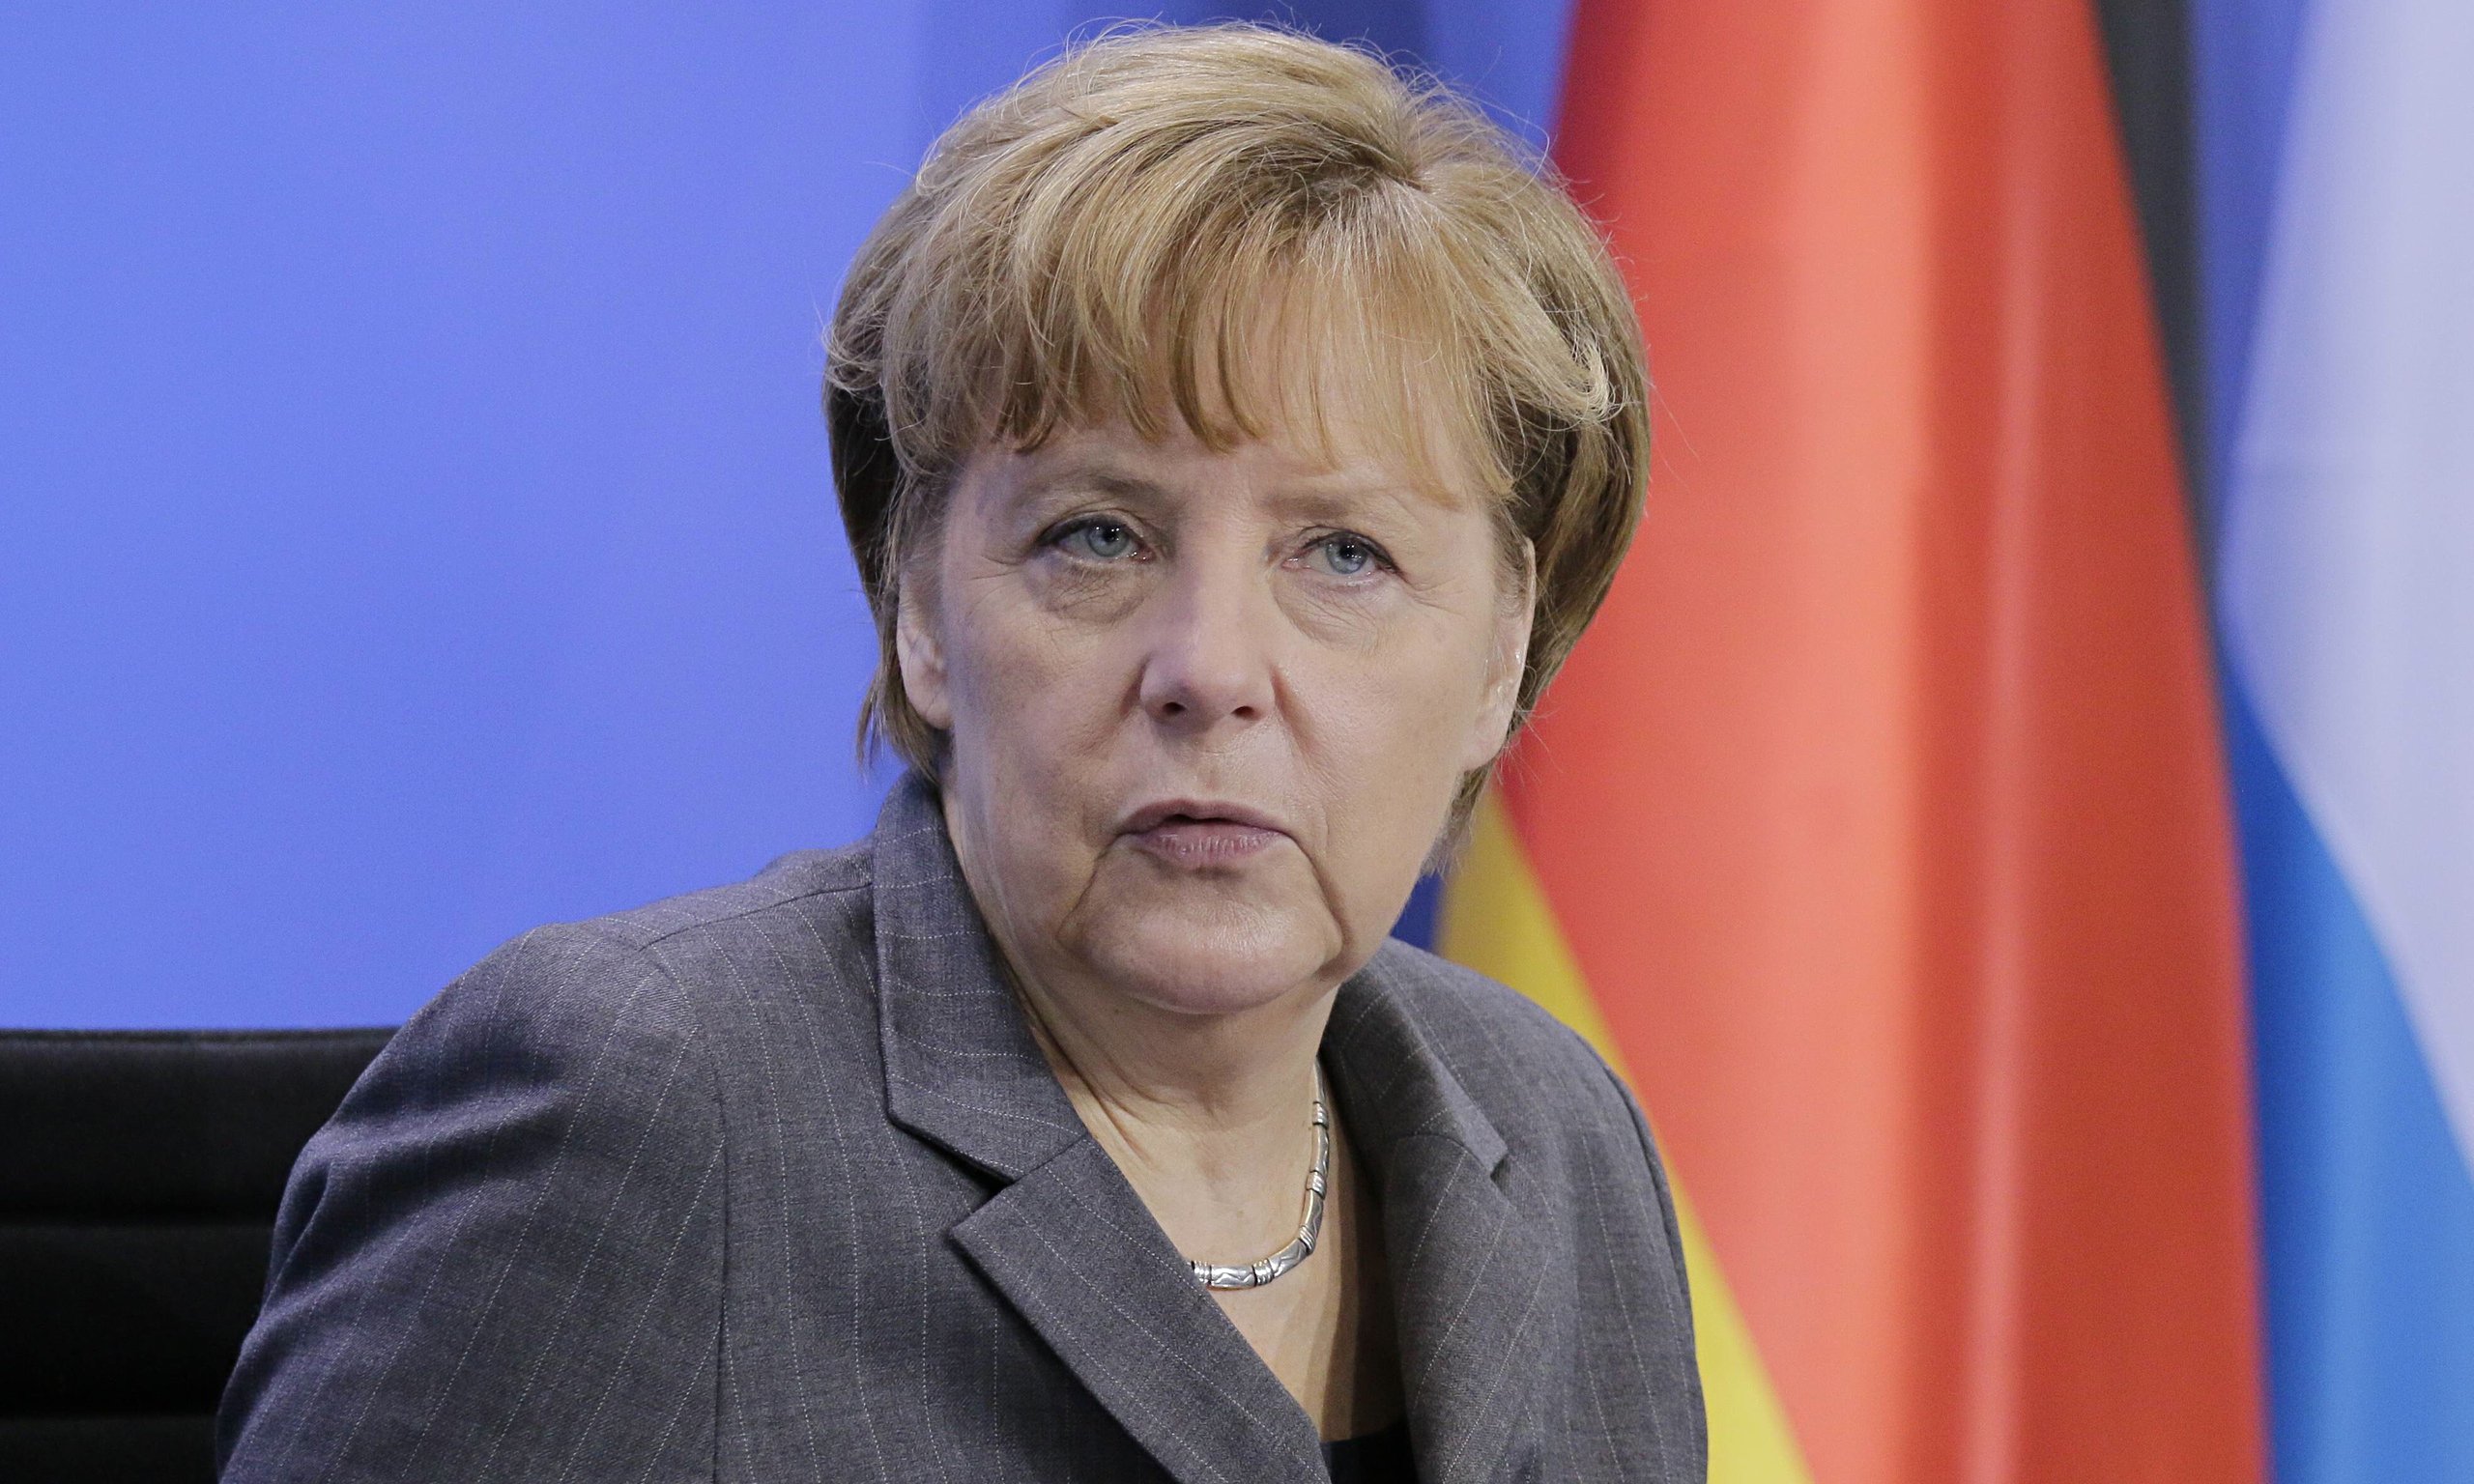 Merkel tells Germans refugee influx 'an opportunity'